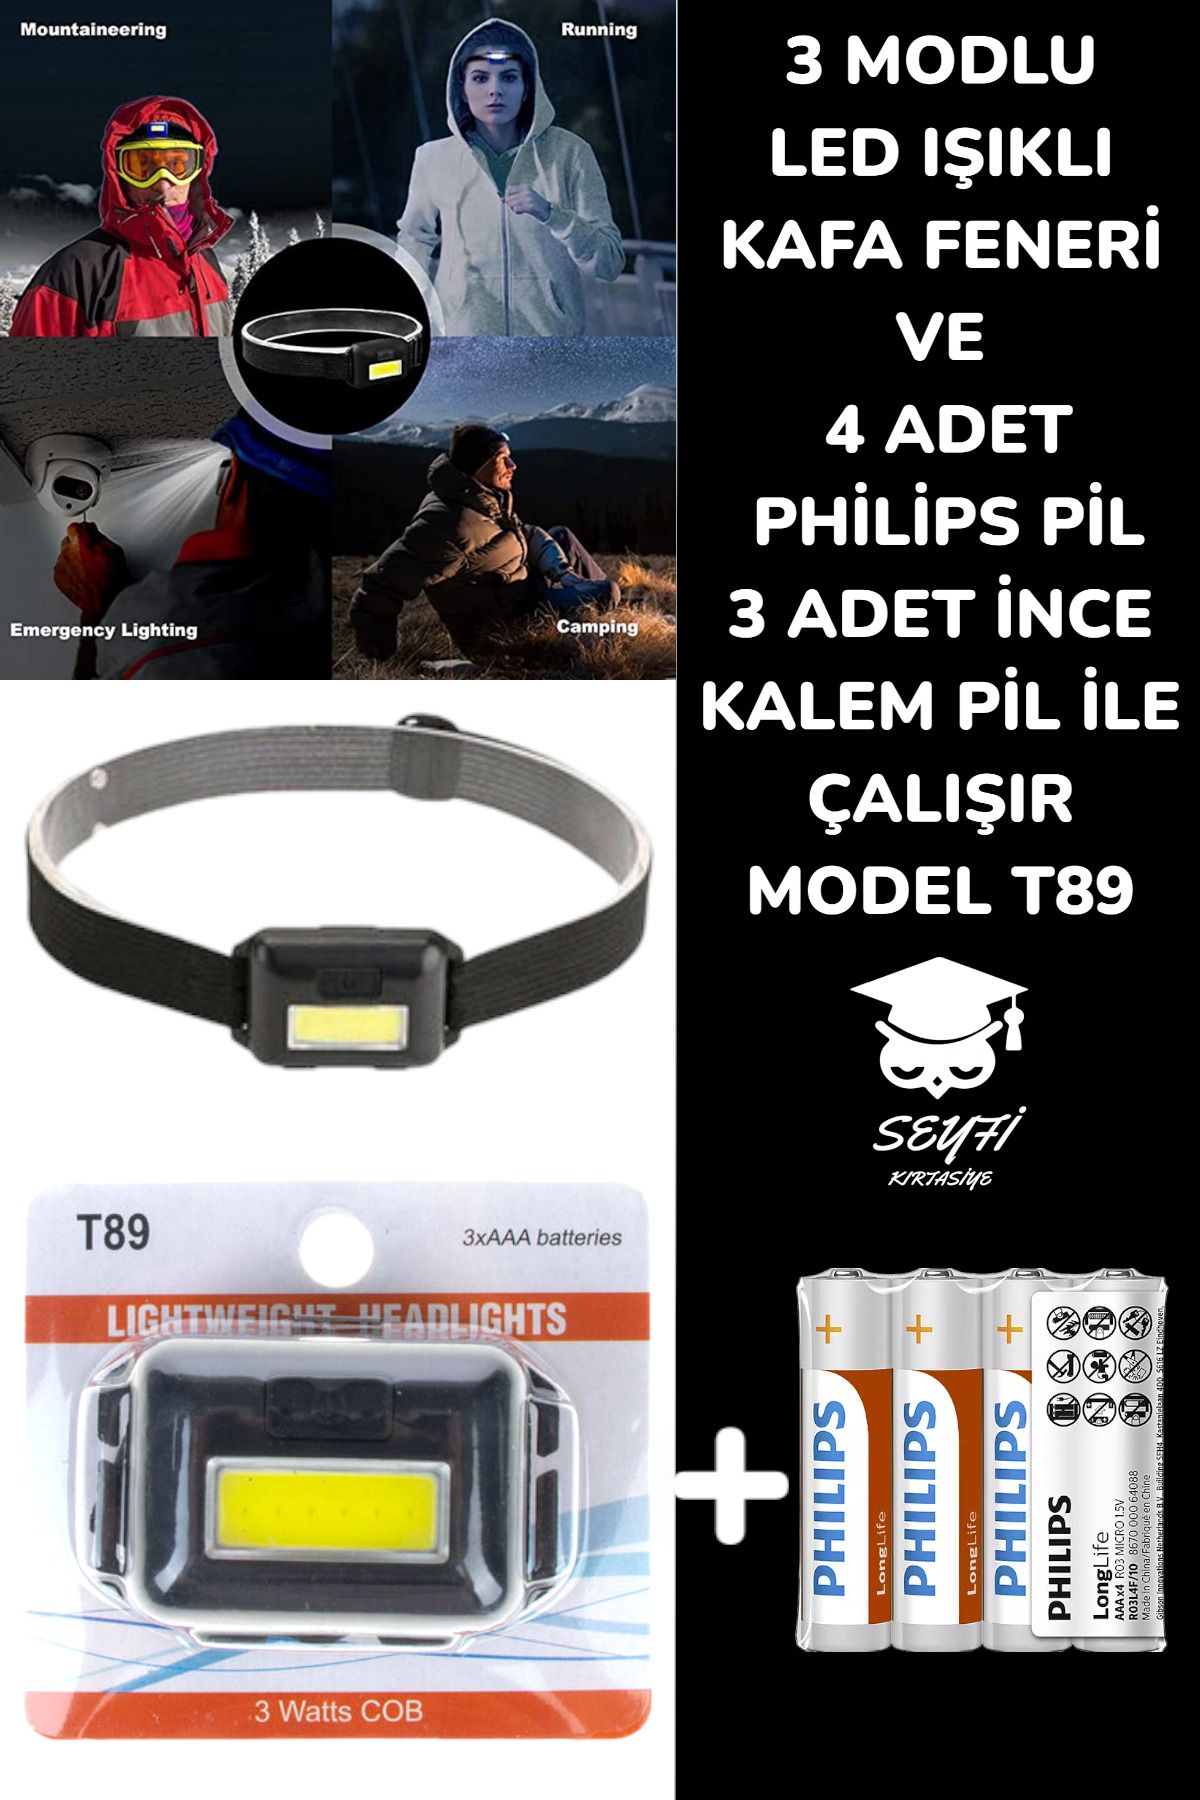 Philips 3 MODLU LED IŞIKLI KAFA FENERİ VE 4 ADET PHİLİPS PİL 3 ADET İNCE KALEM PİL İLE ÇALIŞIR MODEL T89